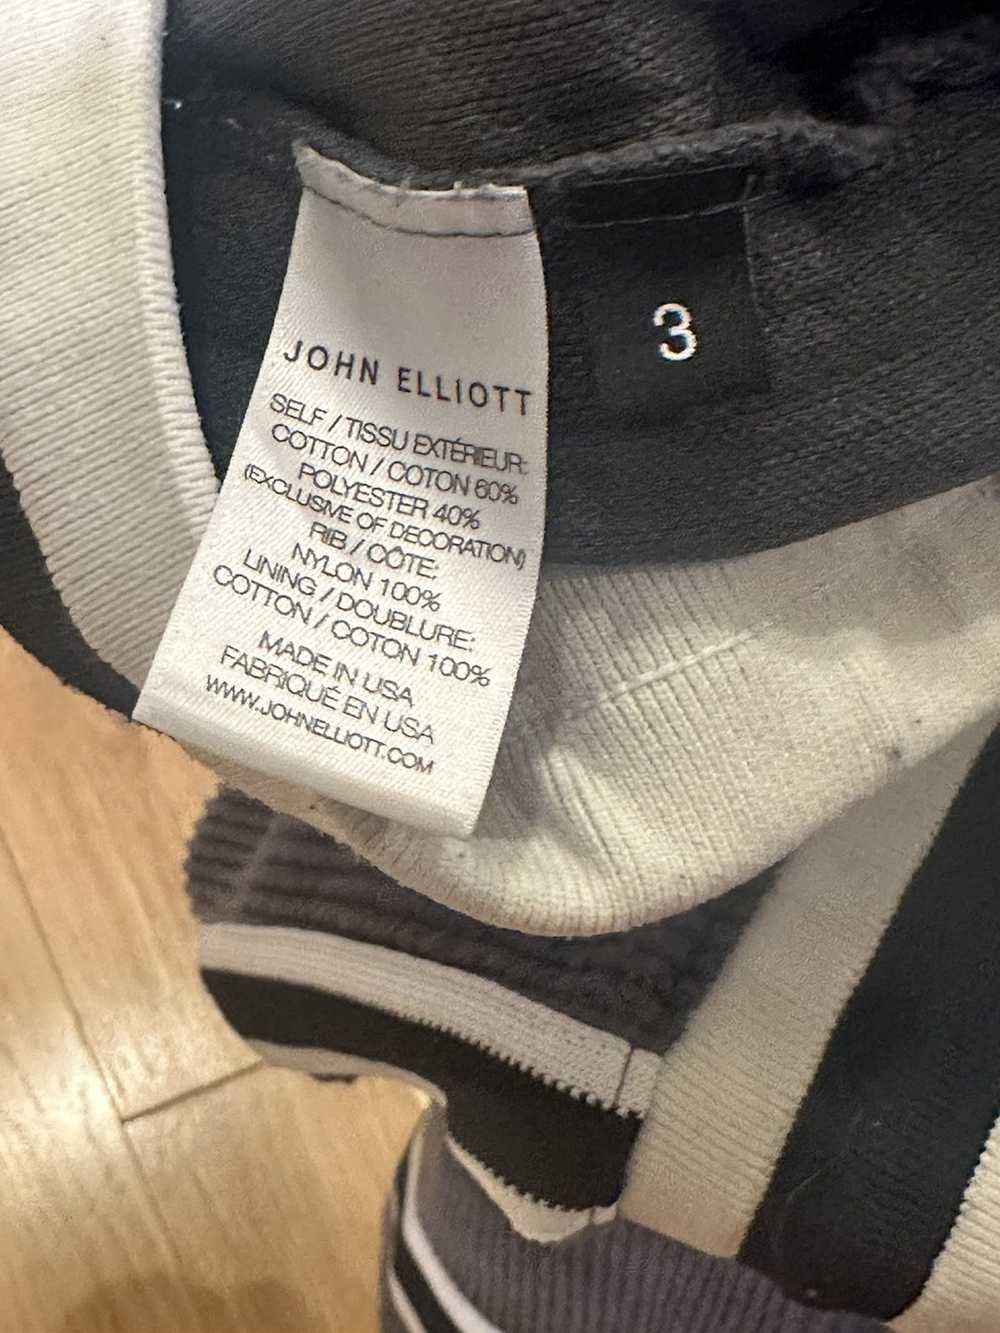 John Elliott John Elliot Corduroy Shorts - Size 3 - image 6